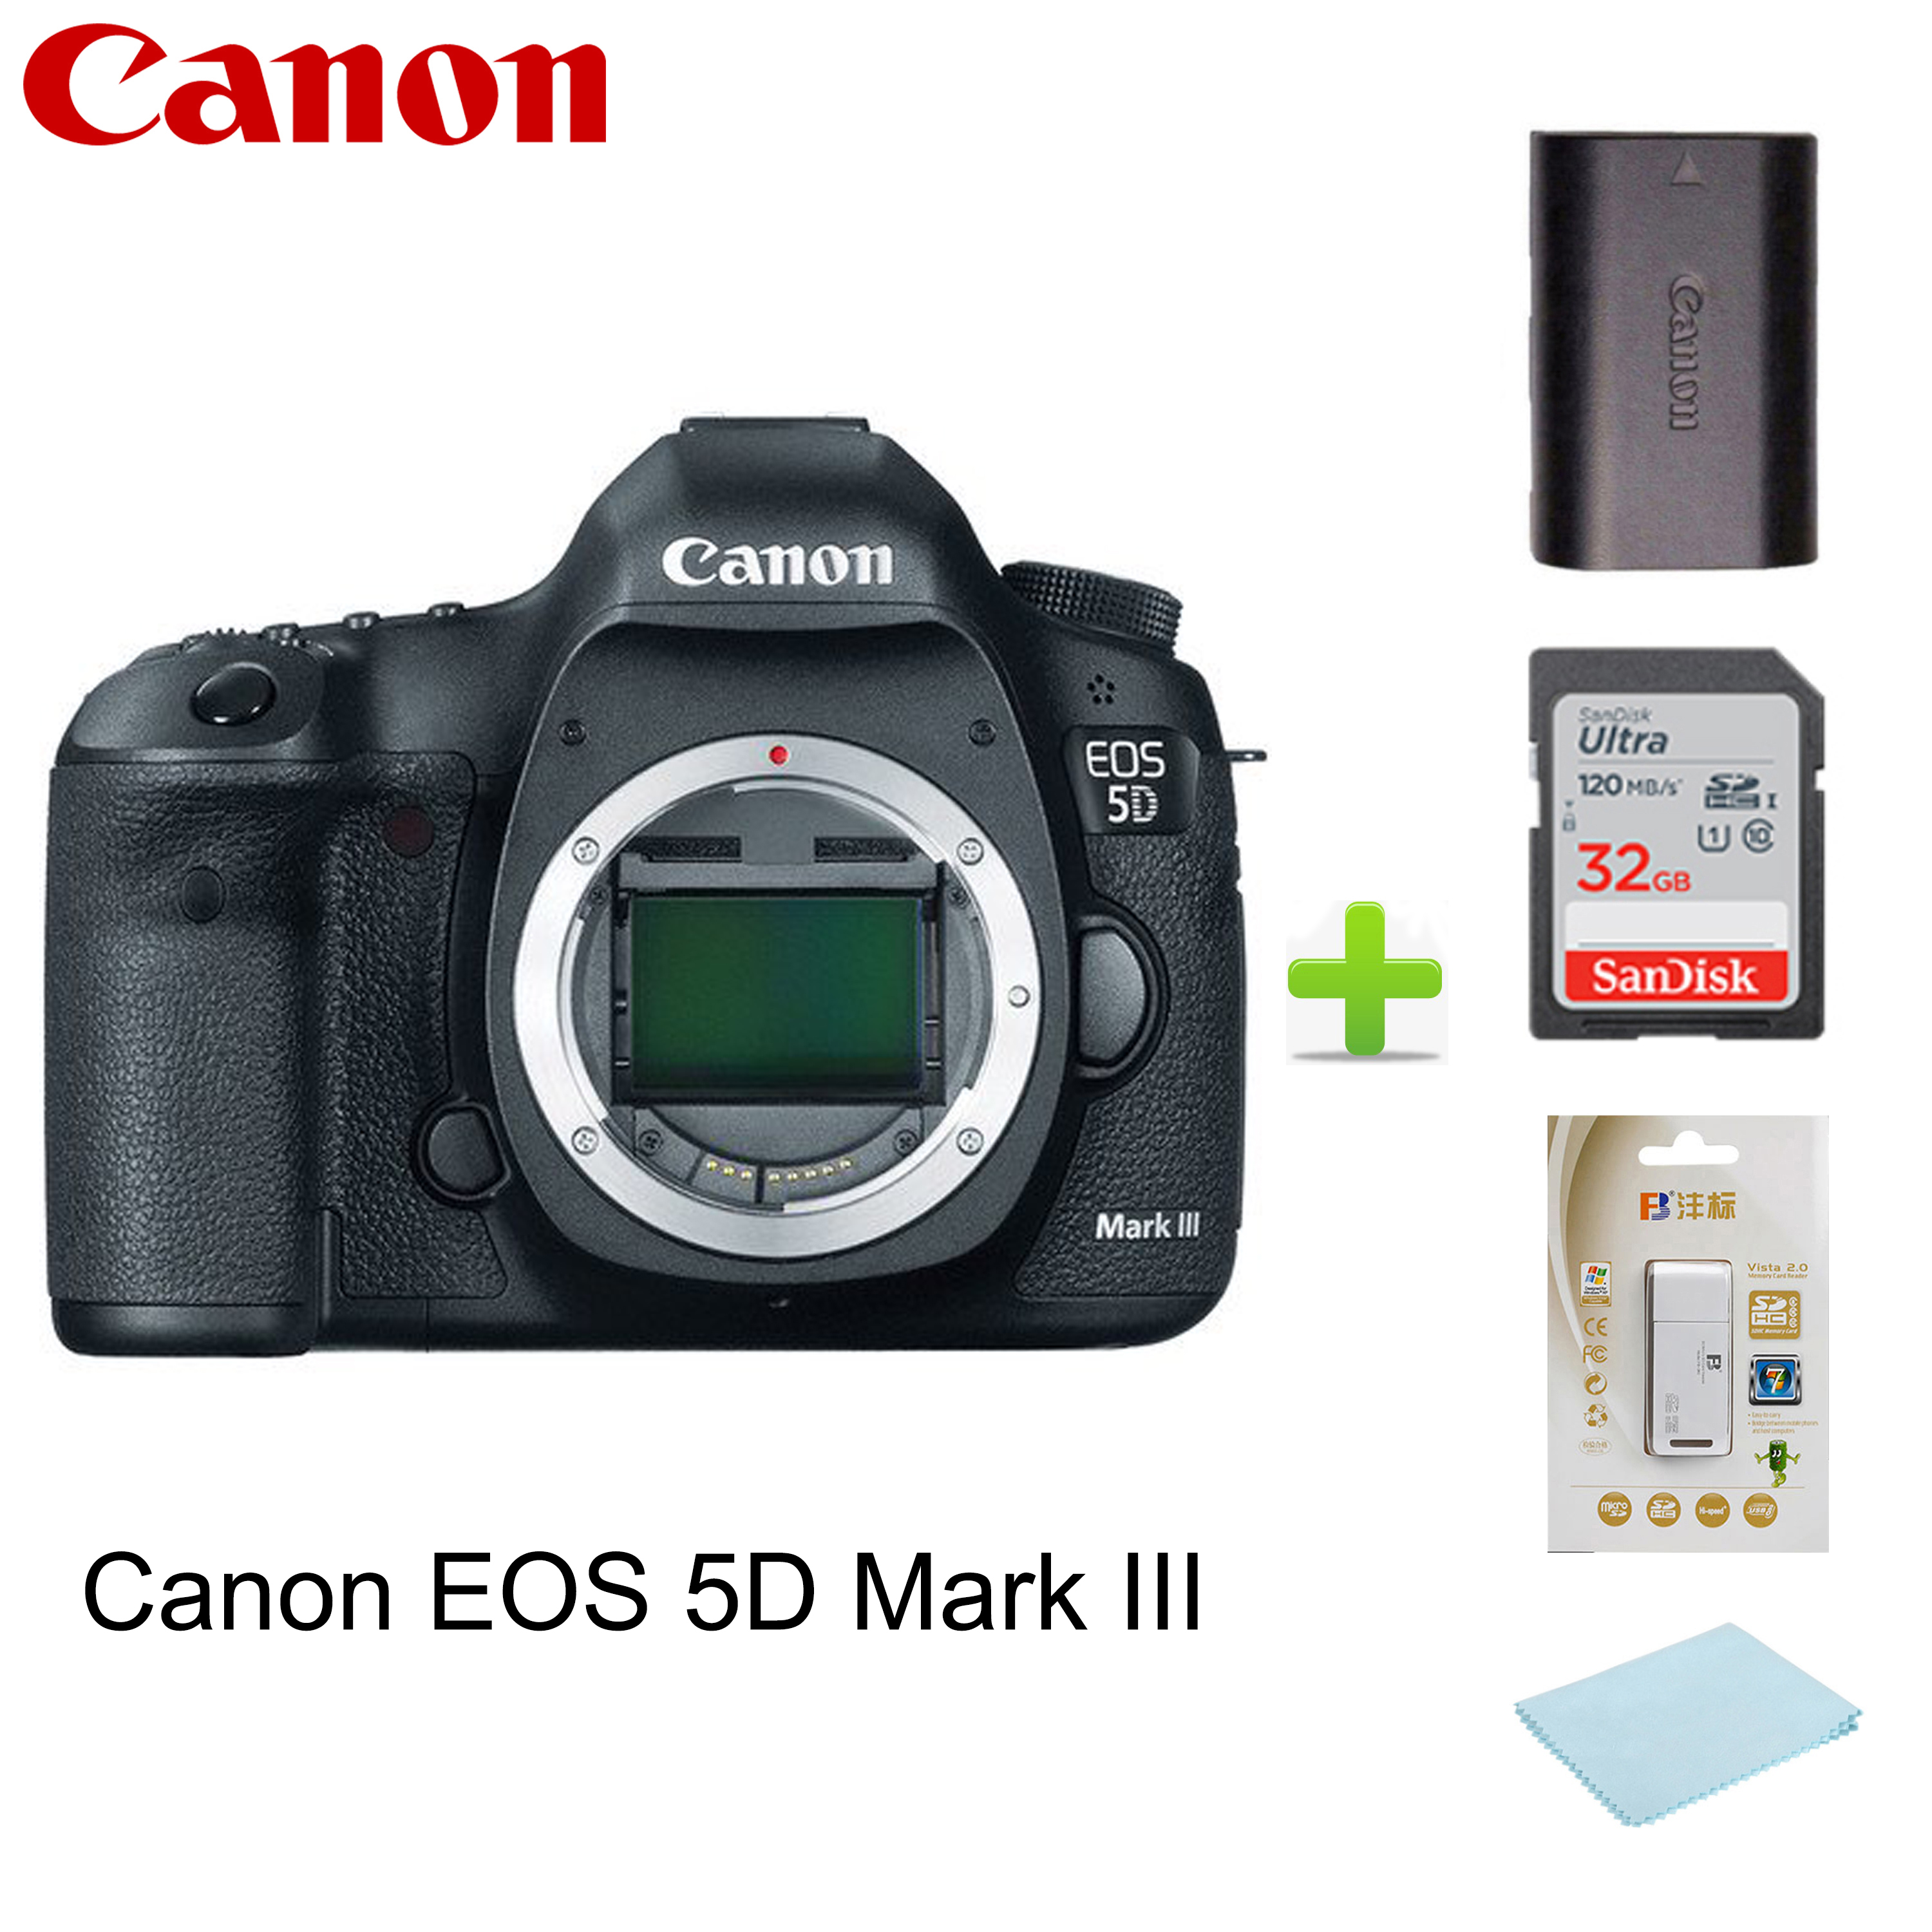 Canon EOS 5D Mark III (body only) - black | Walmart Canada